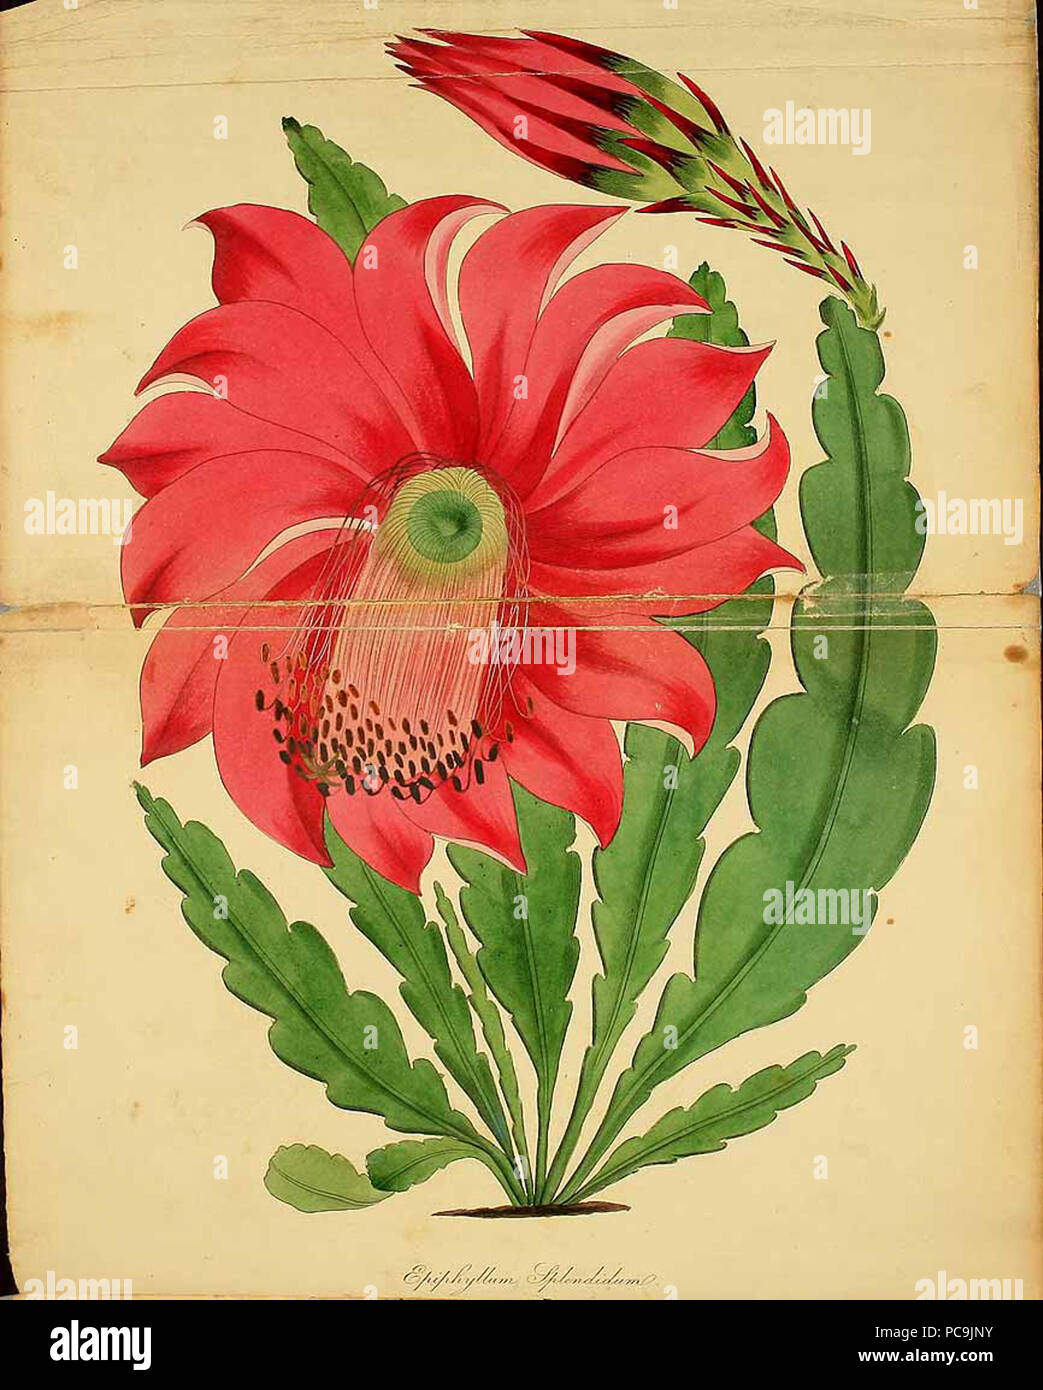 192 Epiphyllum splendidum 188820 Stock Photo